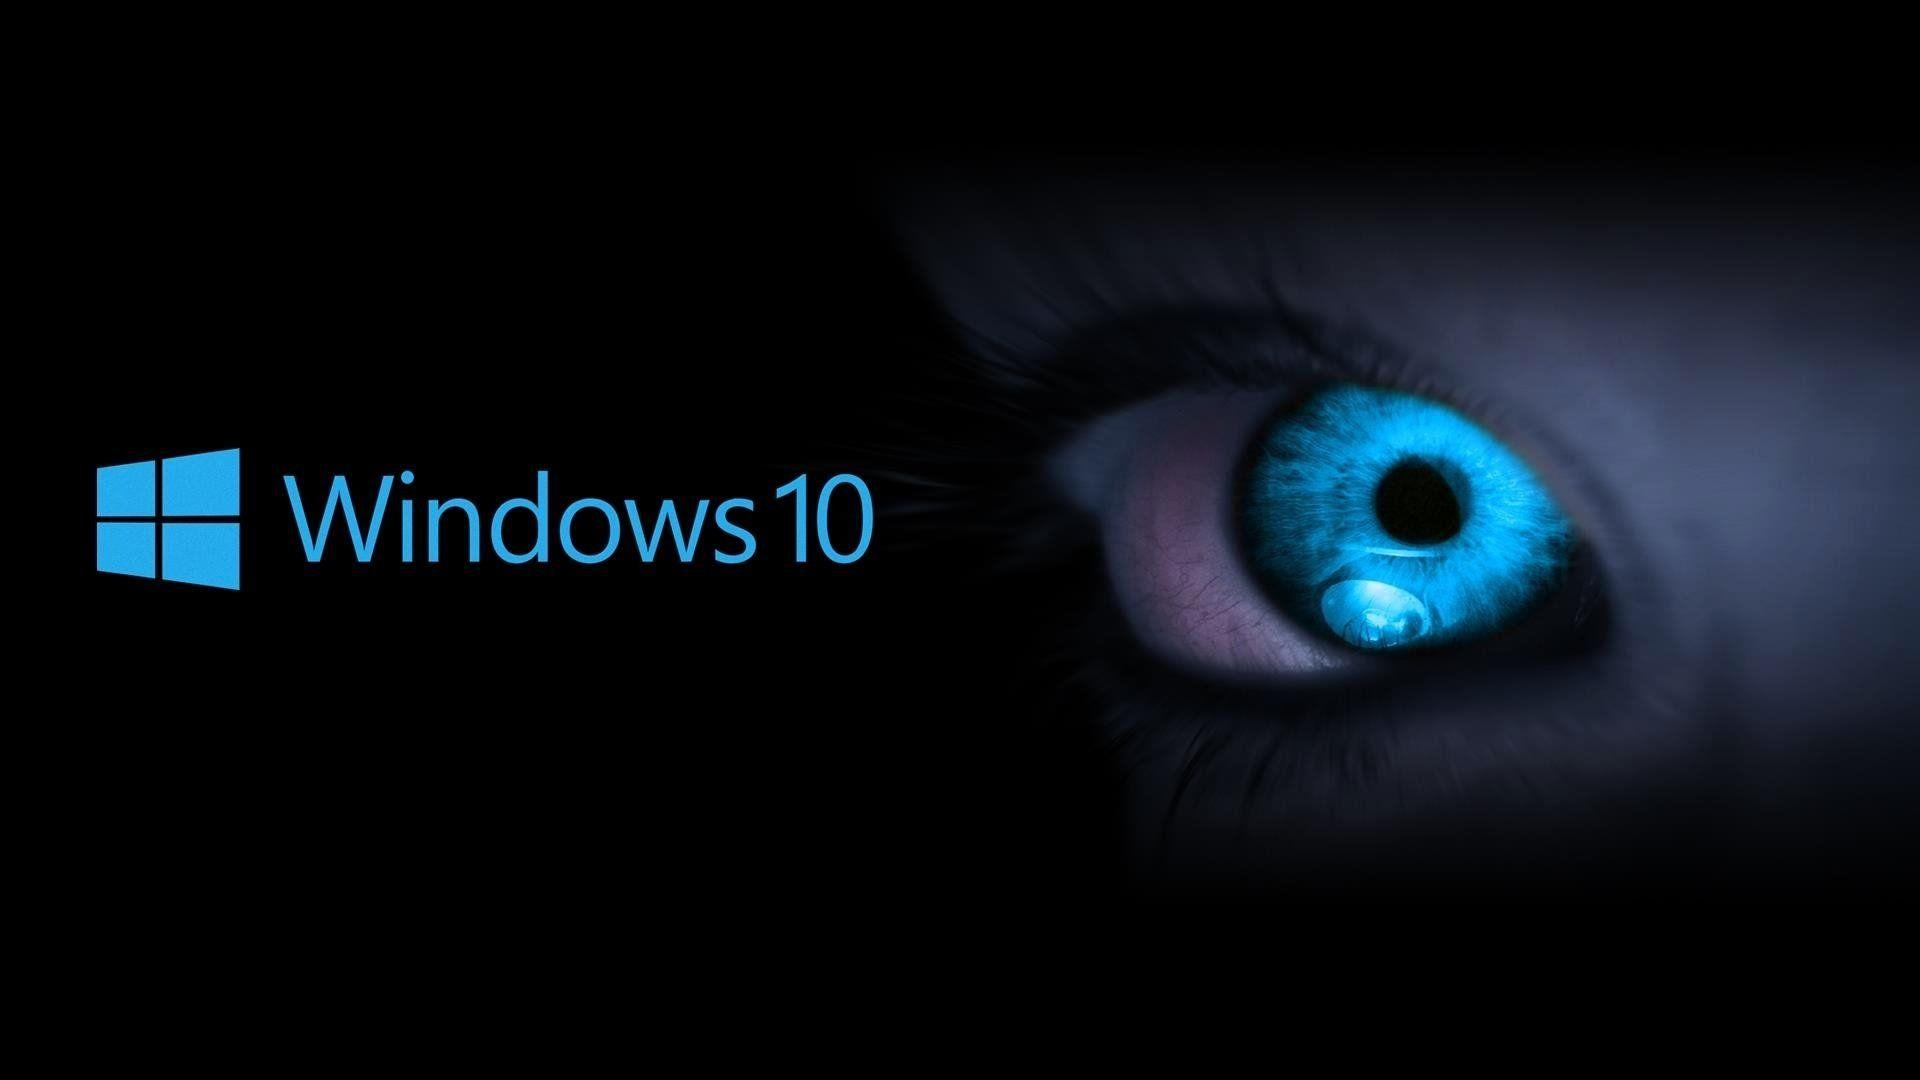 Windows 10 Hd Wallpapers Top Free Windows 10 Hd